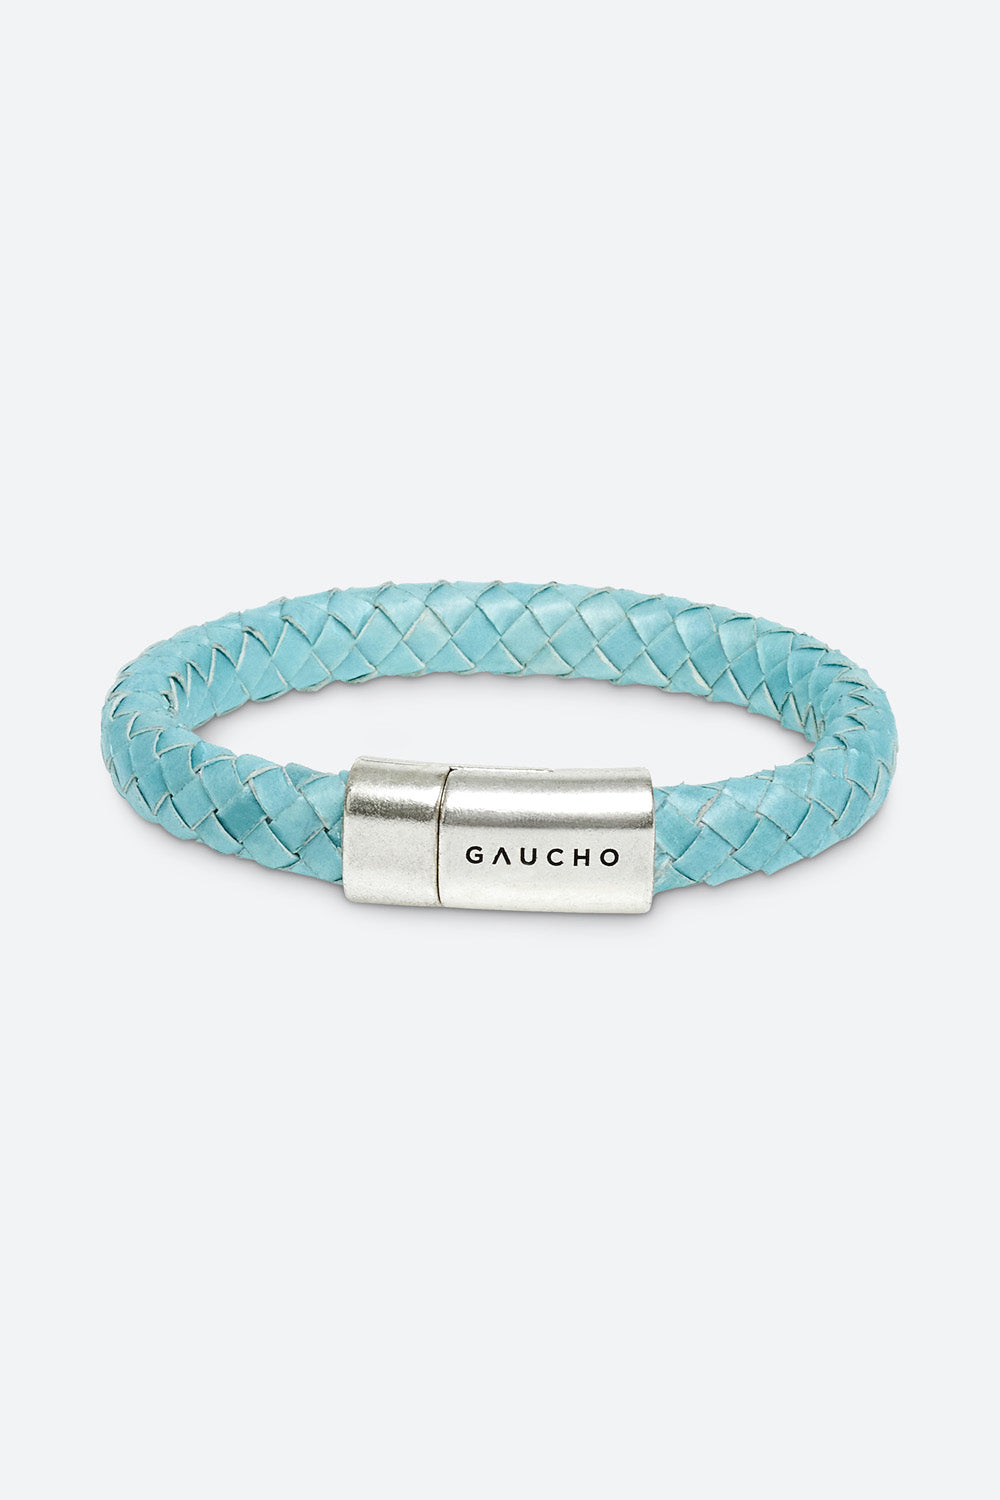 Braided Leather Bracelet in sky blue